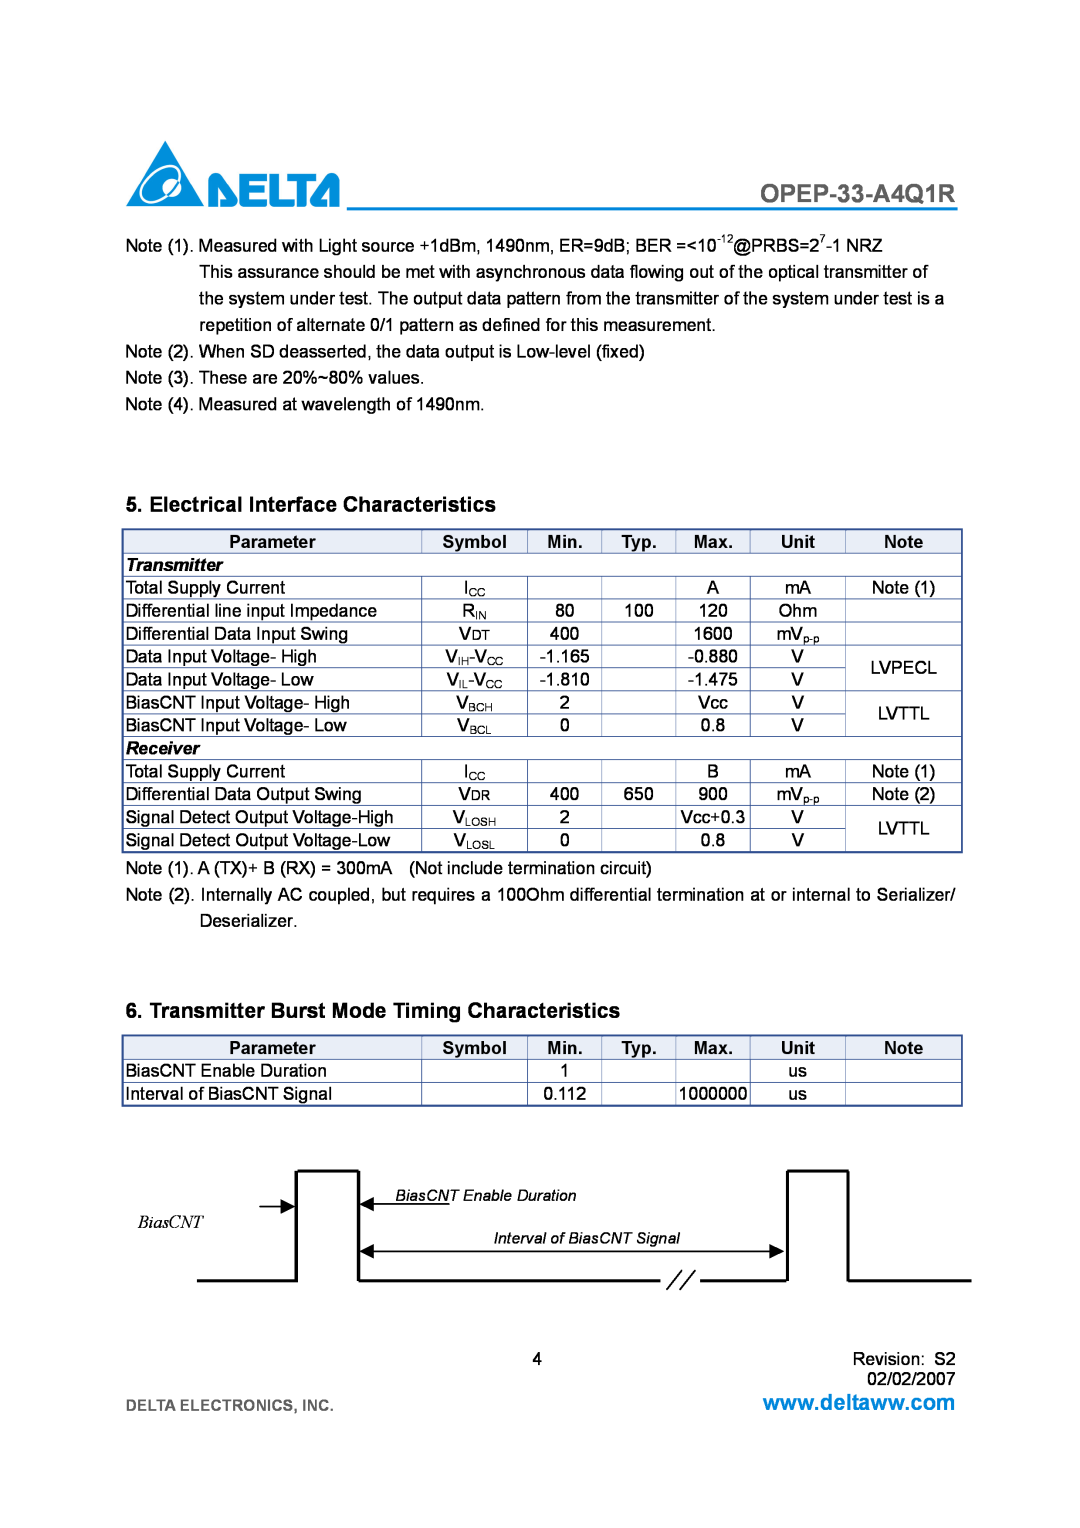 Delta Electronics OPEP-33-A4Q1R manual Electrical Interface Characteristics, Transmitter Burst Mode Timing Characteristics 